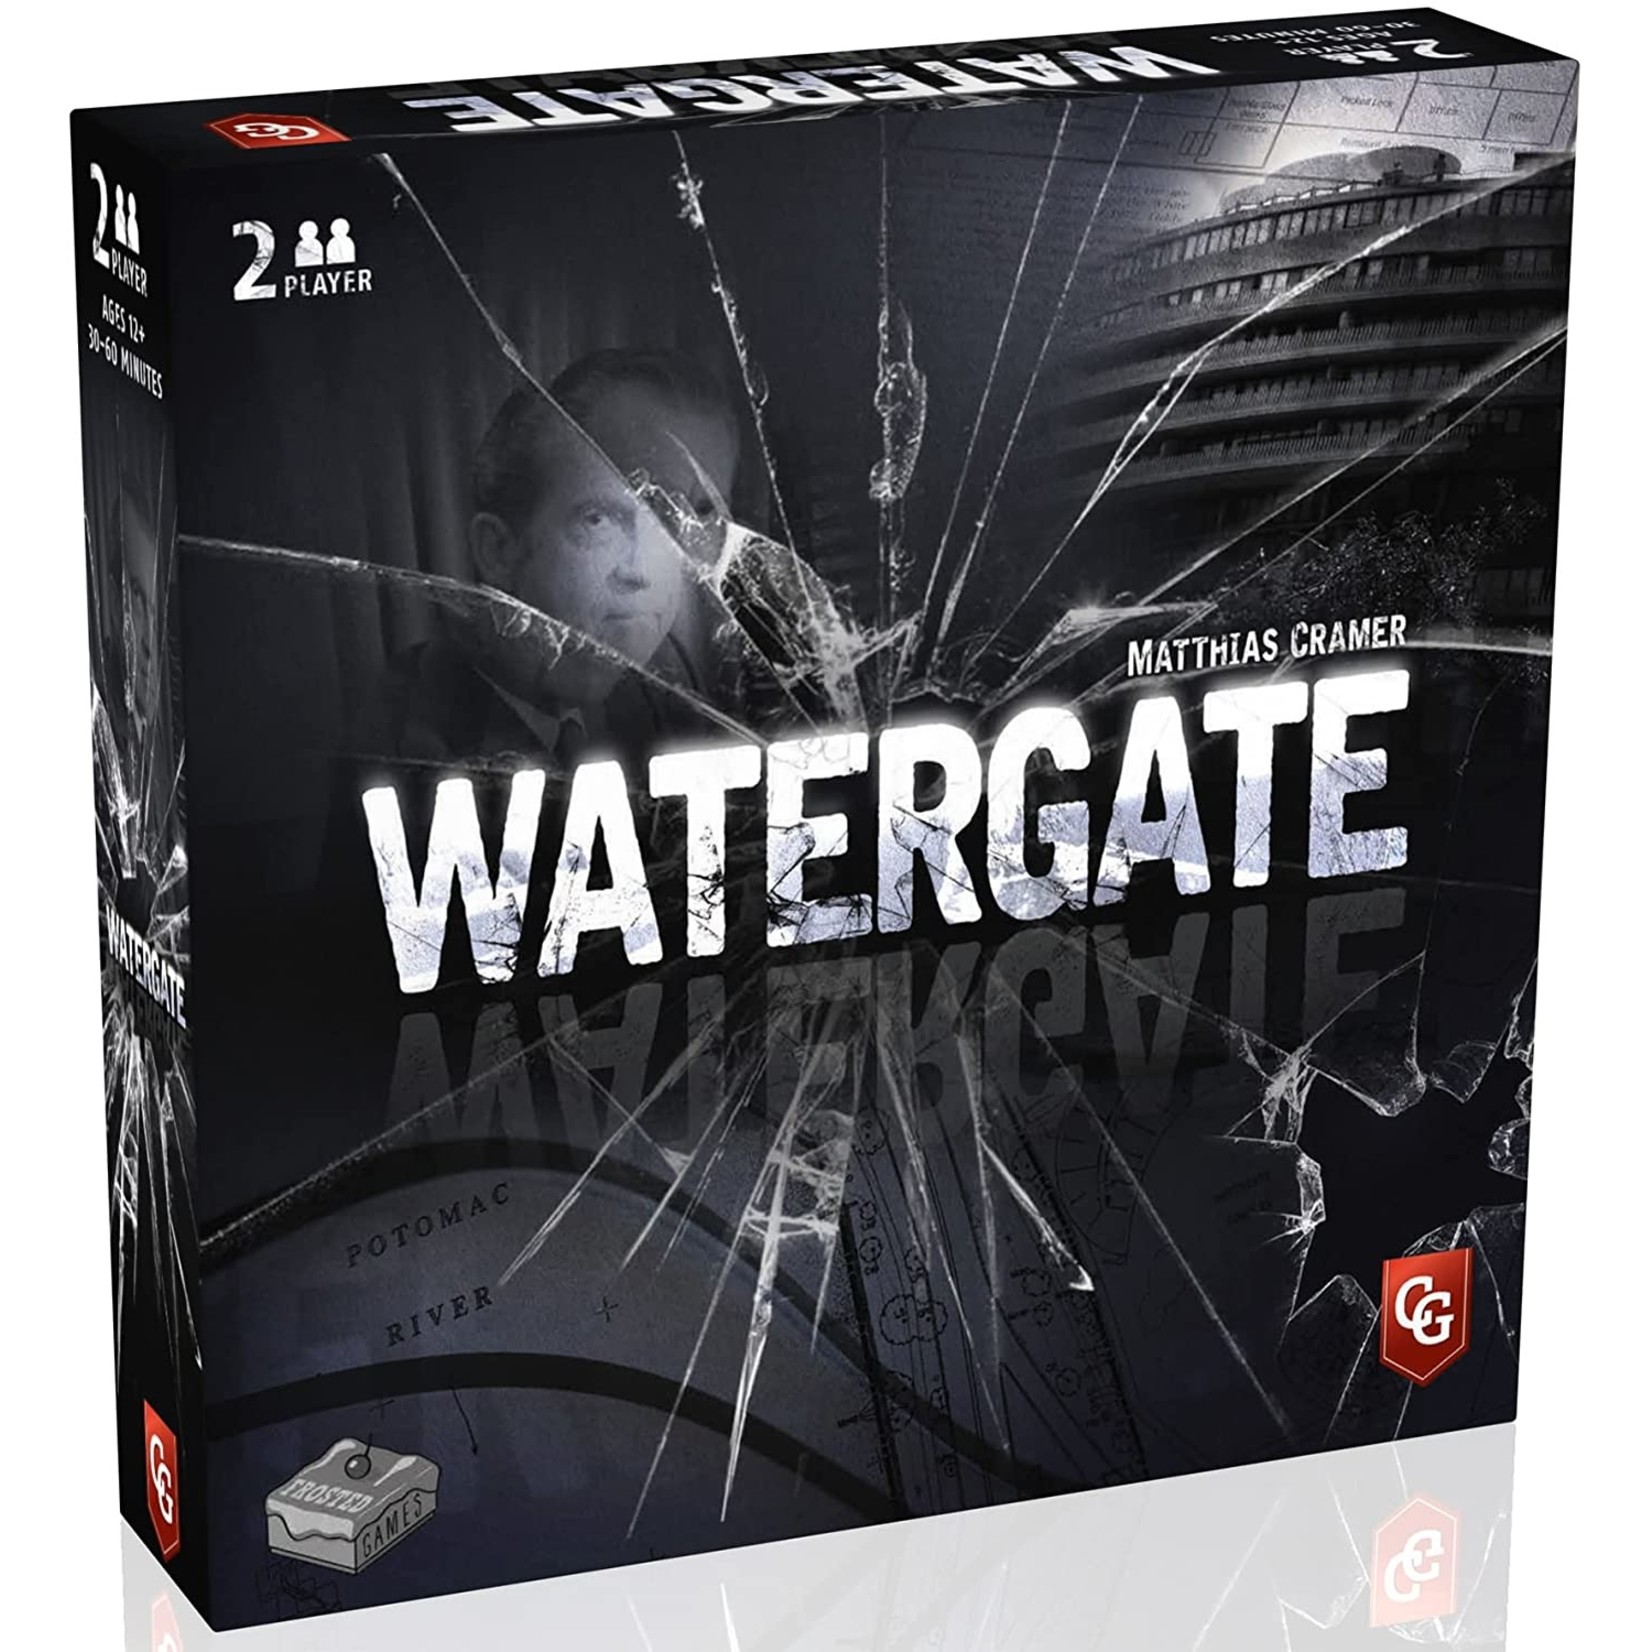 Capstone Games Watergate